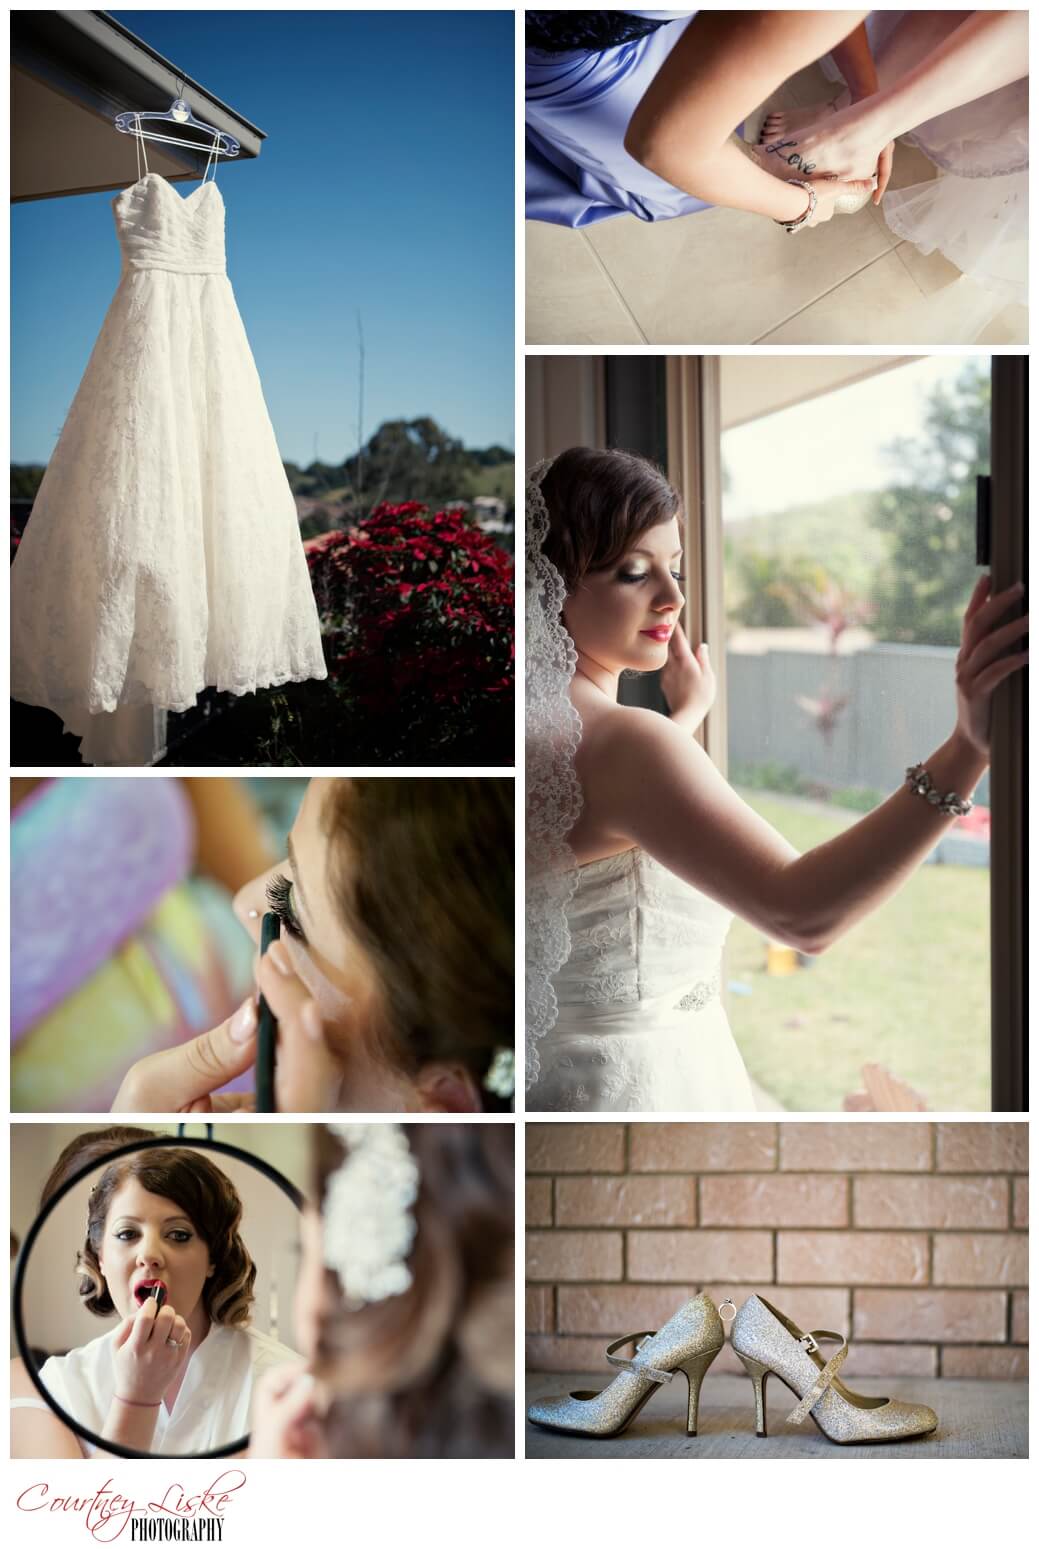 Carlen & Amy - Regina Wedding Photographer - Courtney Liske Photography